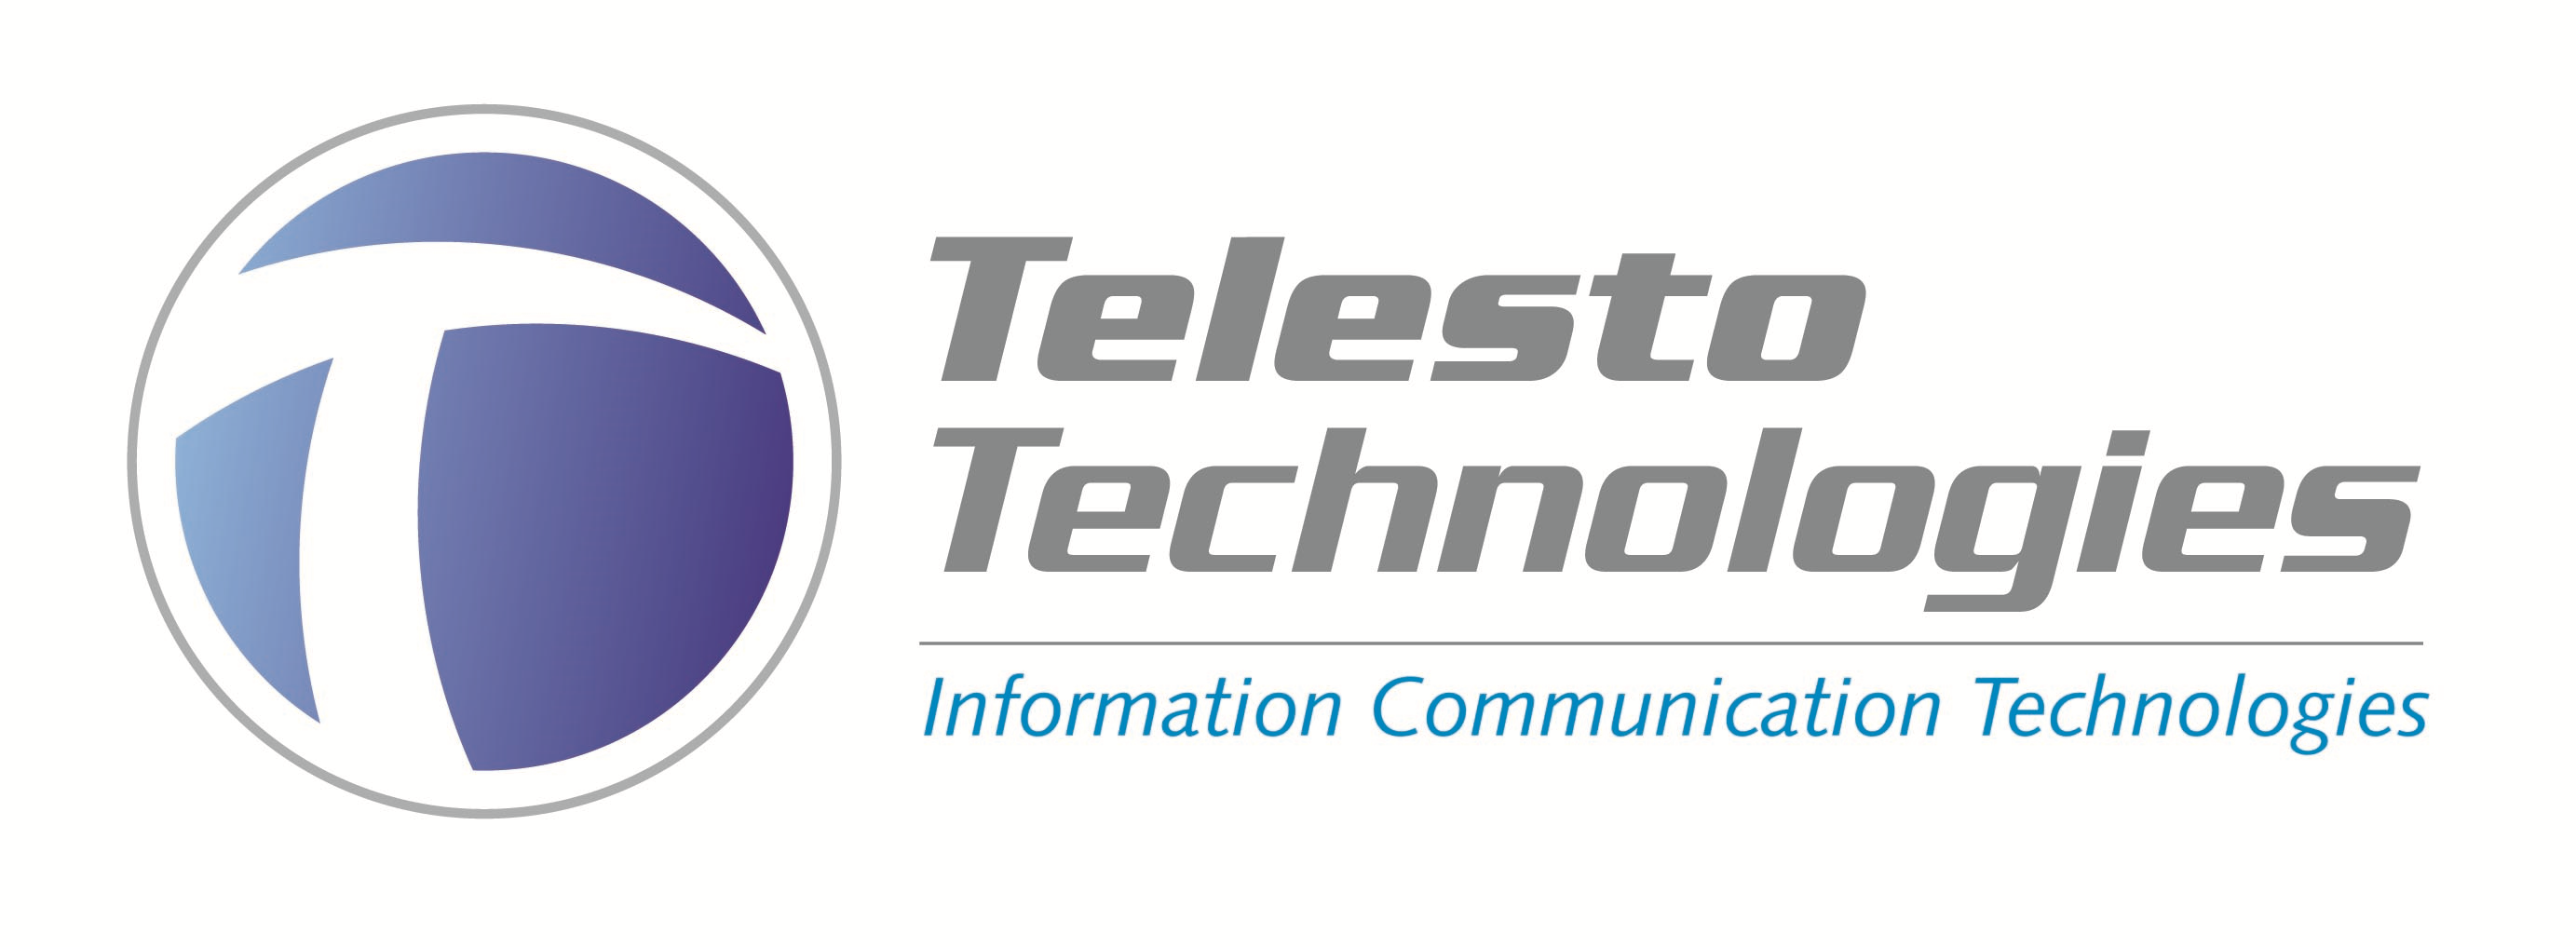 Telesto_logo